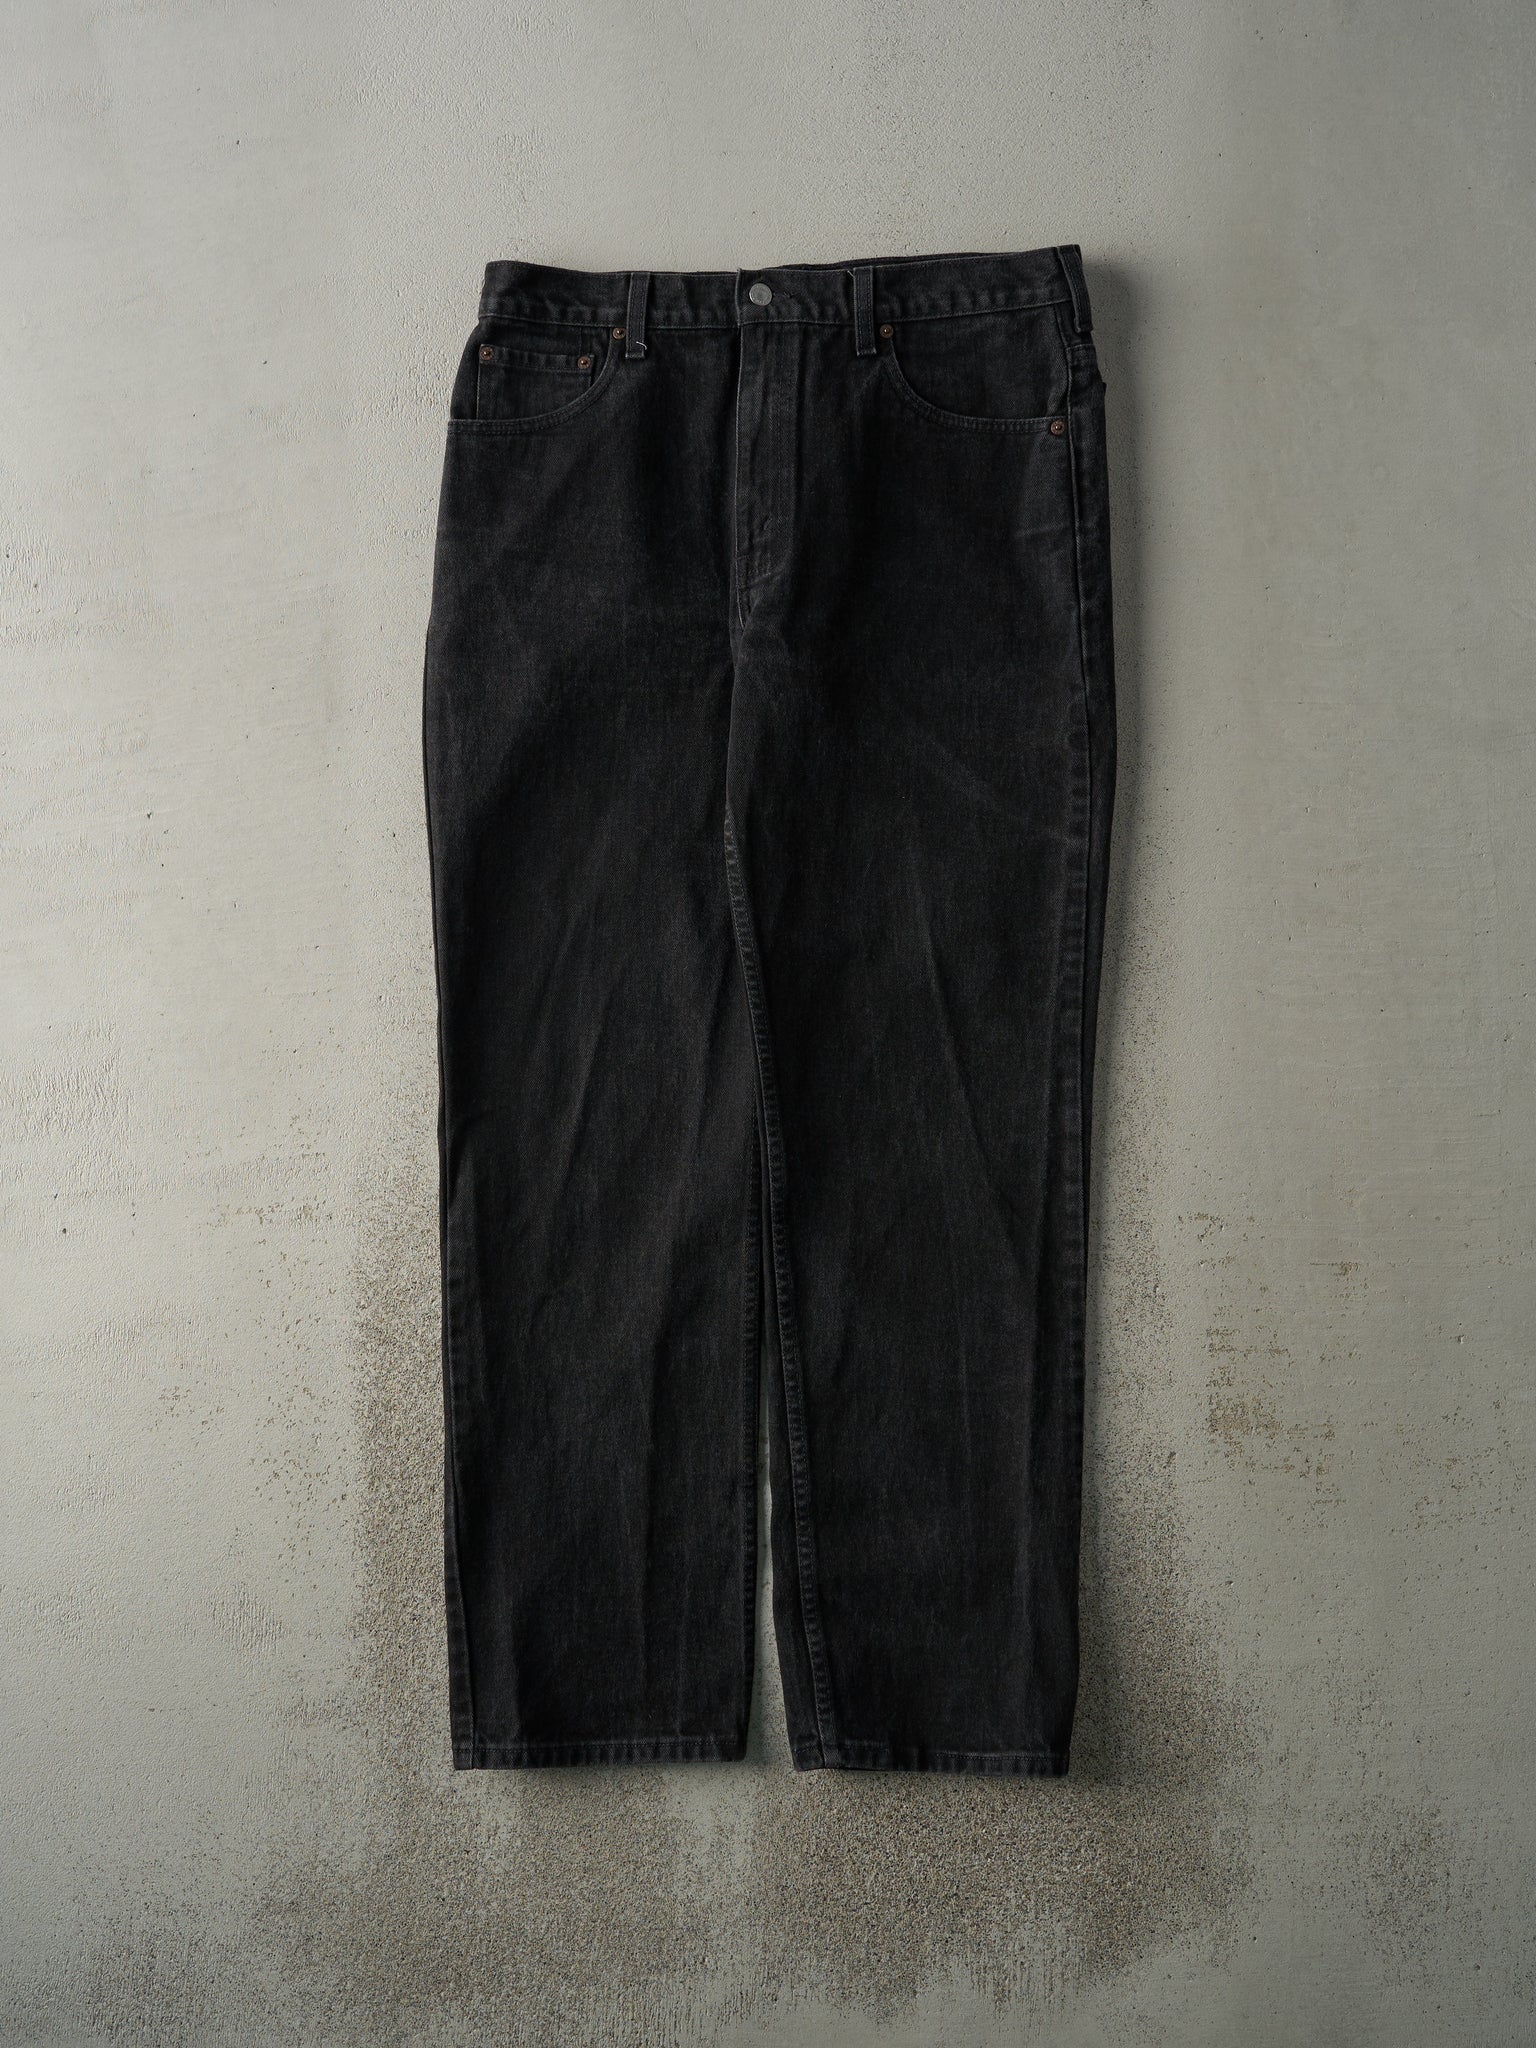 Vintage 90s Black Levi's Red Tab Denim Pants (35x31)